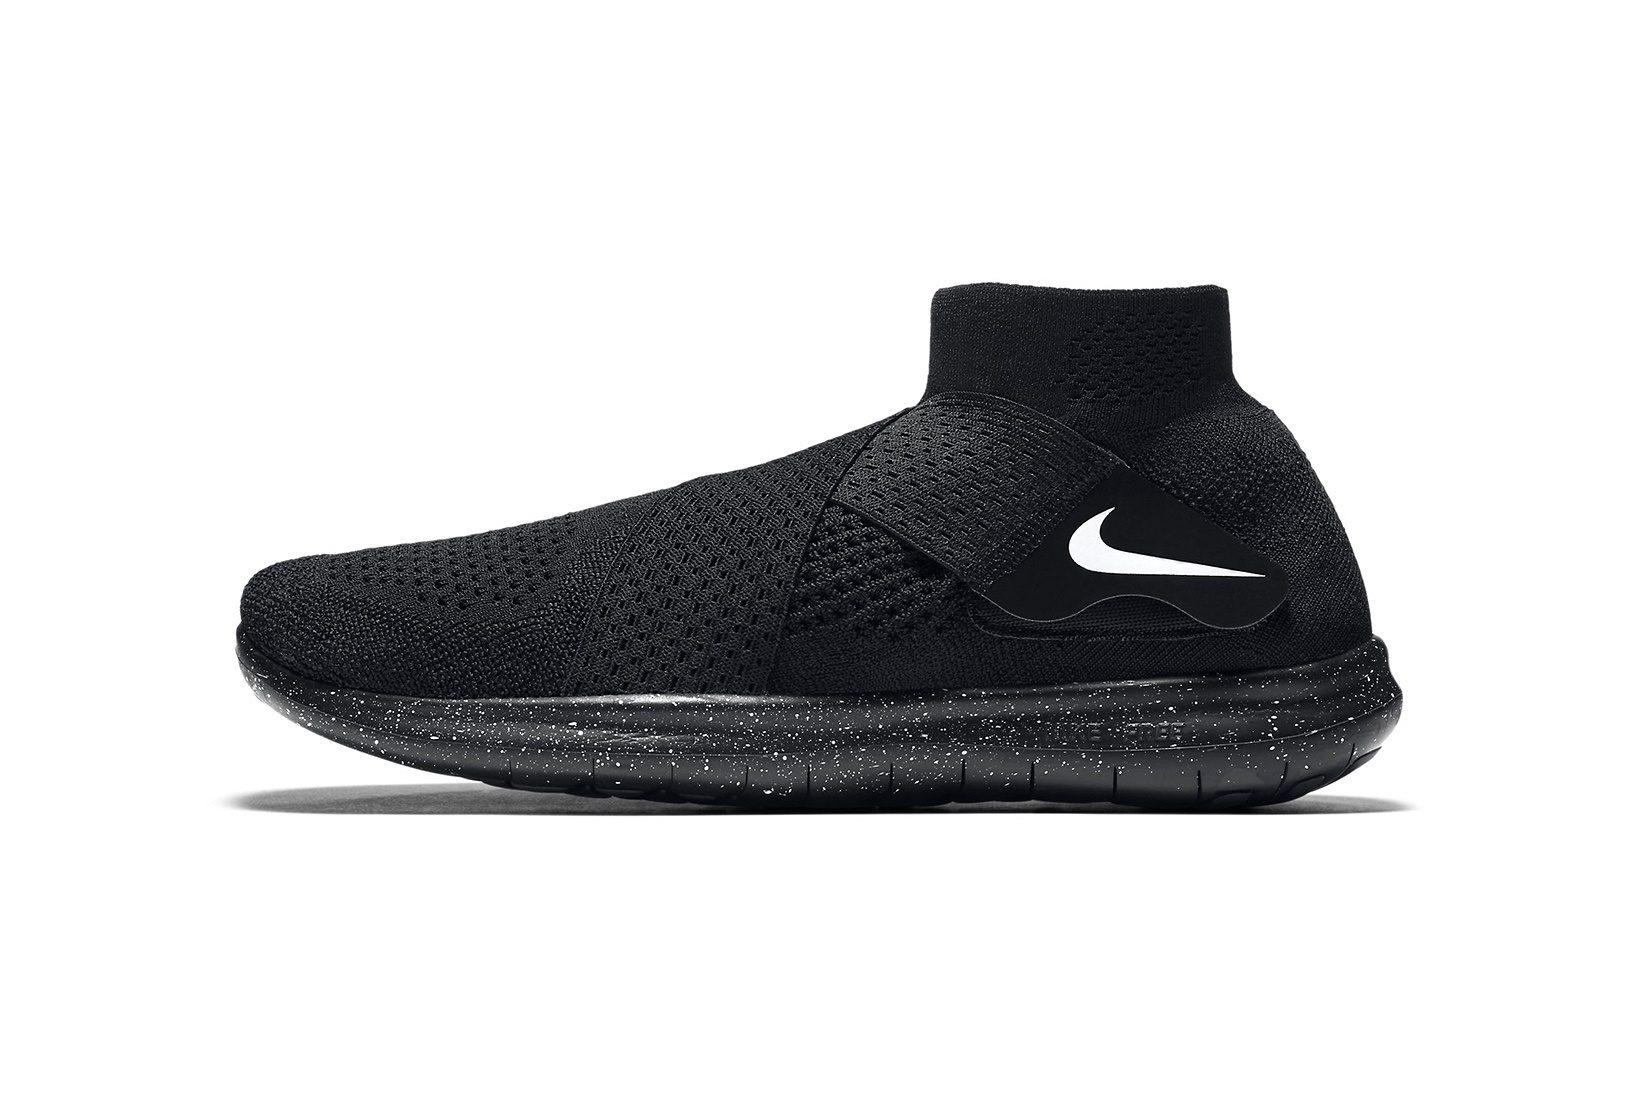 UNDERCOVER x NikeLab Release GYAKUSOU Footwear For Summer 2017